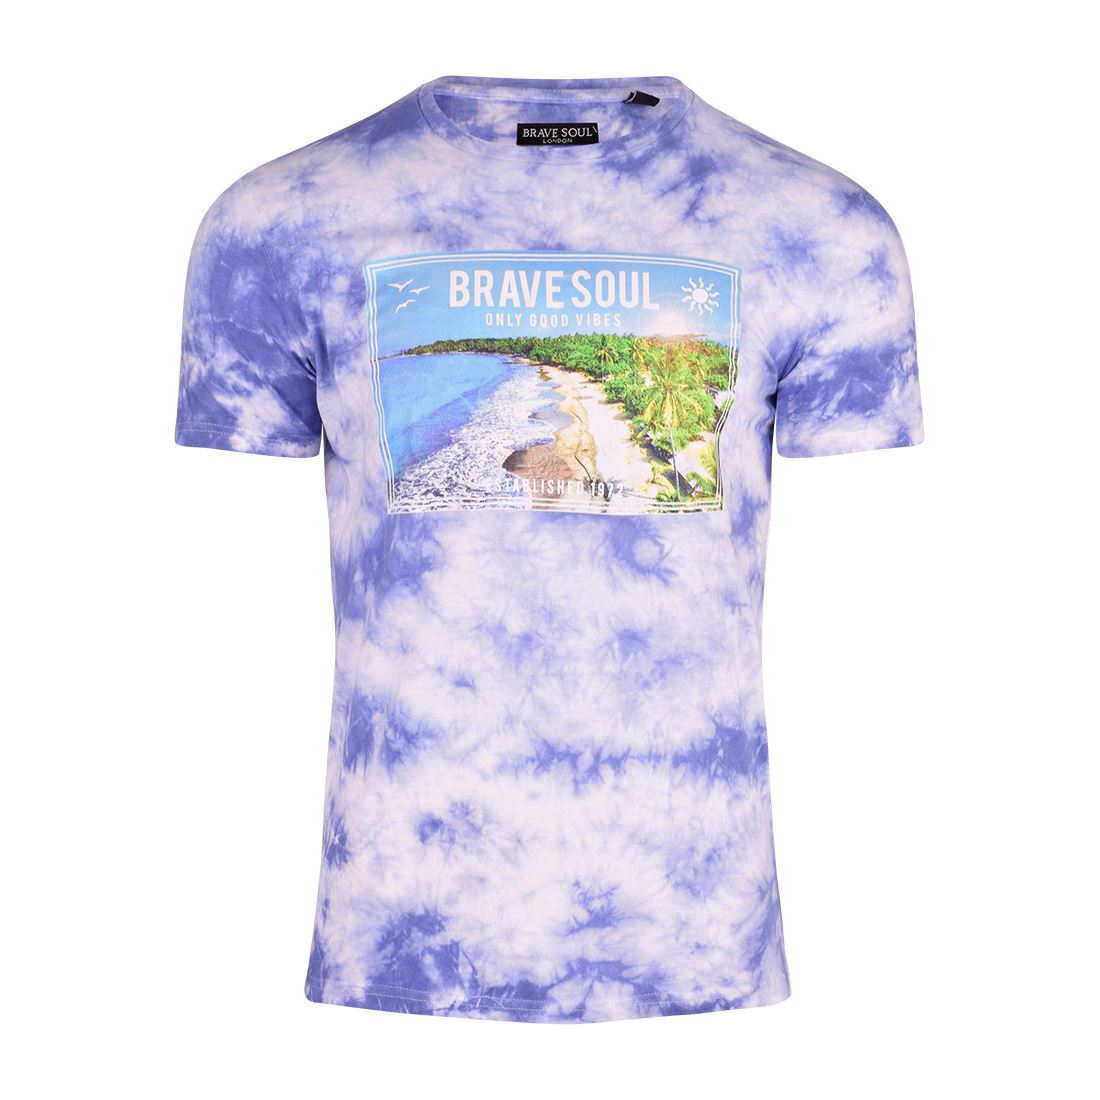 Tie Dye Beach T-Shirt Summer Holiday Tropical Paradise Graphic Print Tee Crew Neck Short Sleeve Top